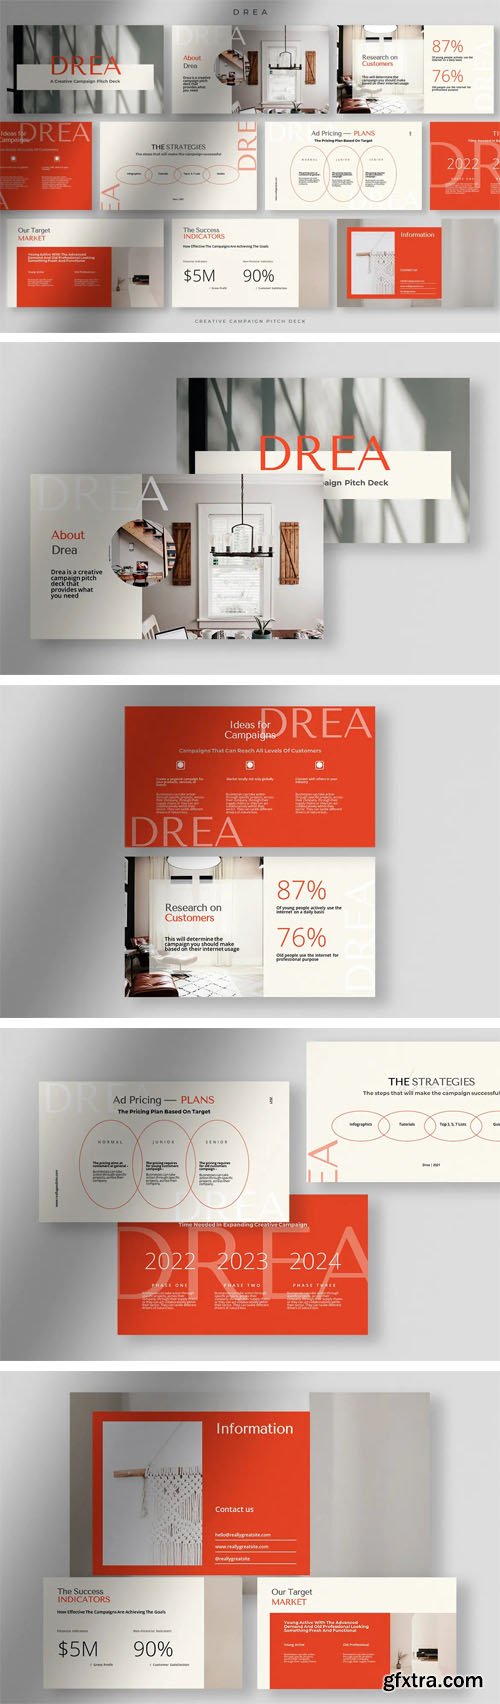 Drea - Creative Campaign Presentation Pitch Deck